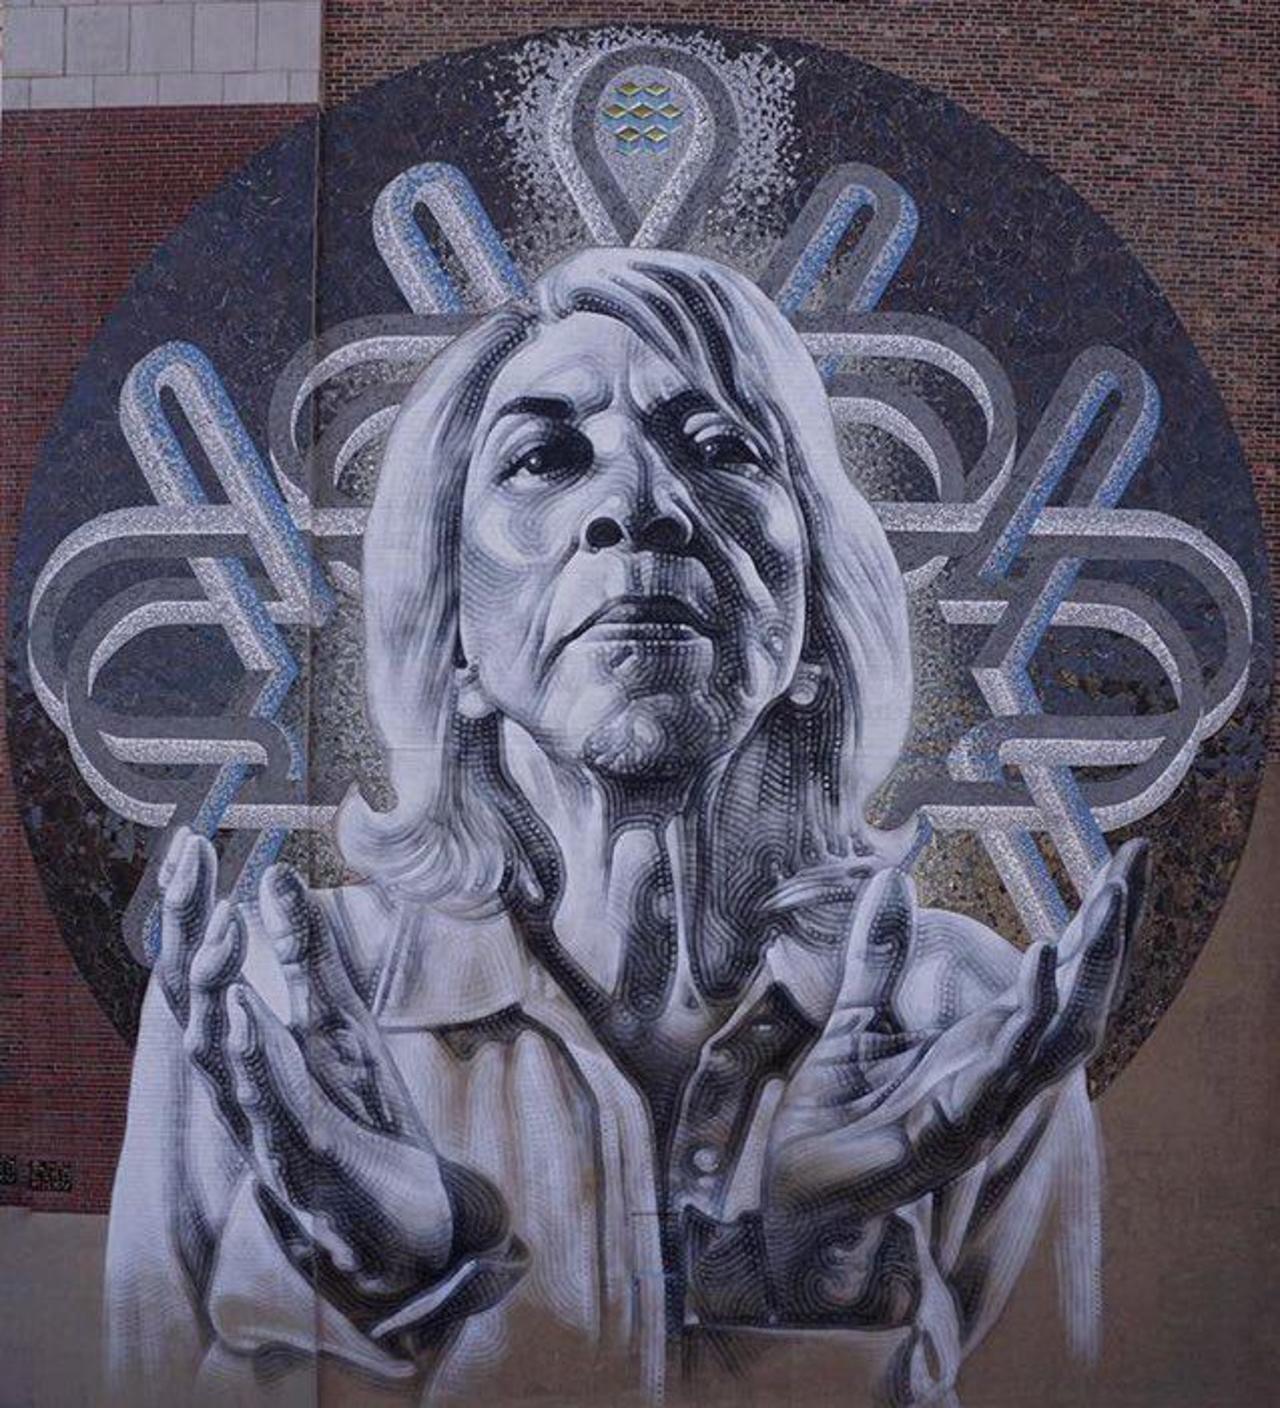 RT belilac "RT belilac "New Street Art by El Mac 

#art #graffiti #mural #streetart https://t.co/SUhEL1B5KR""